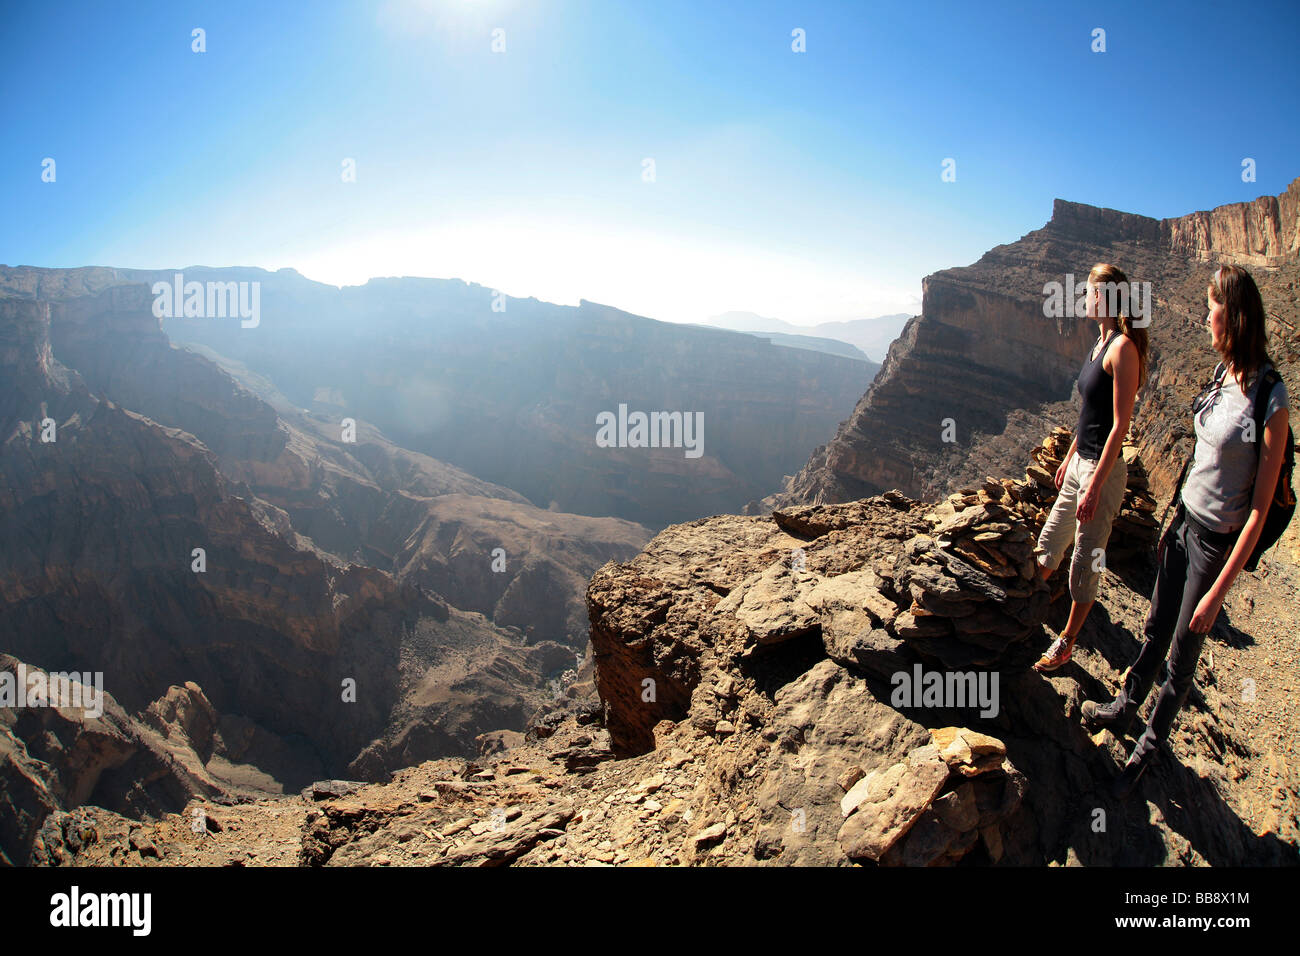 Enjoying the view over Jebel Shams in Oman Stock Photo